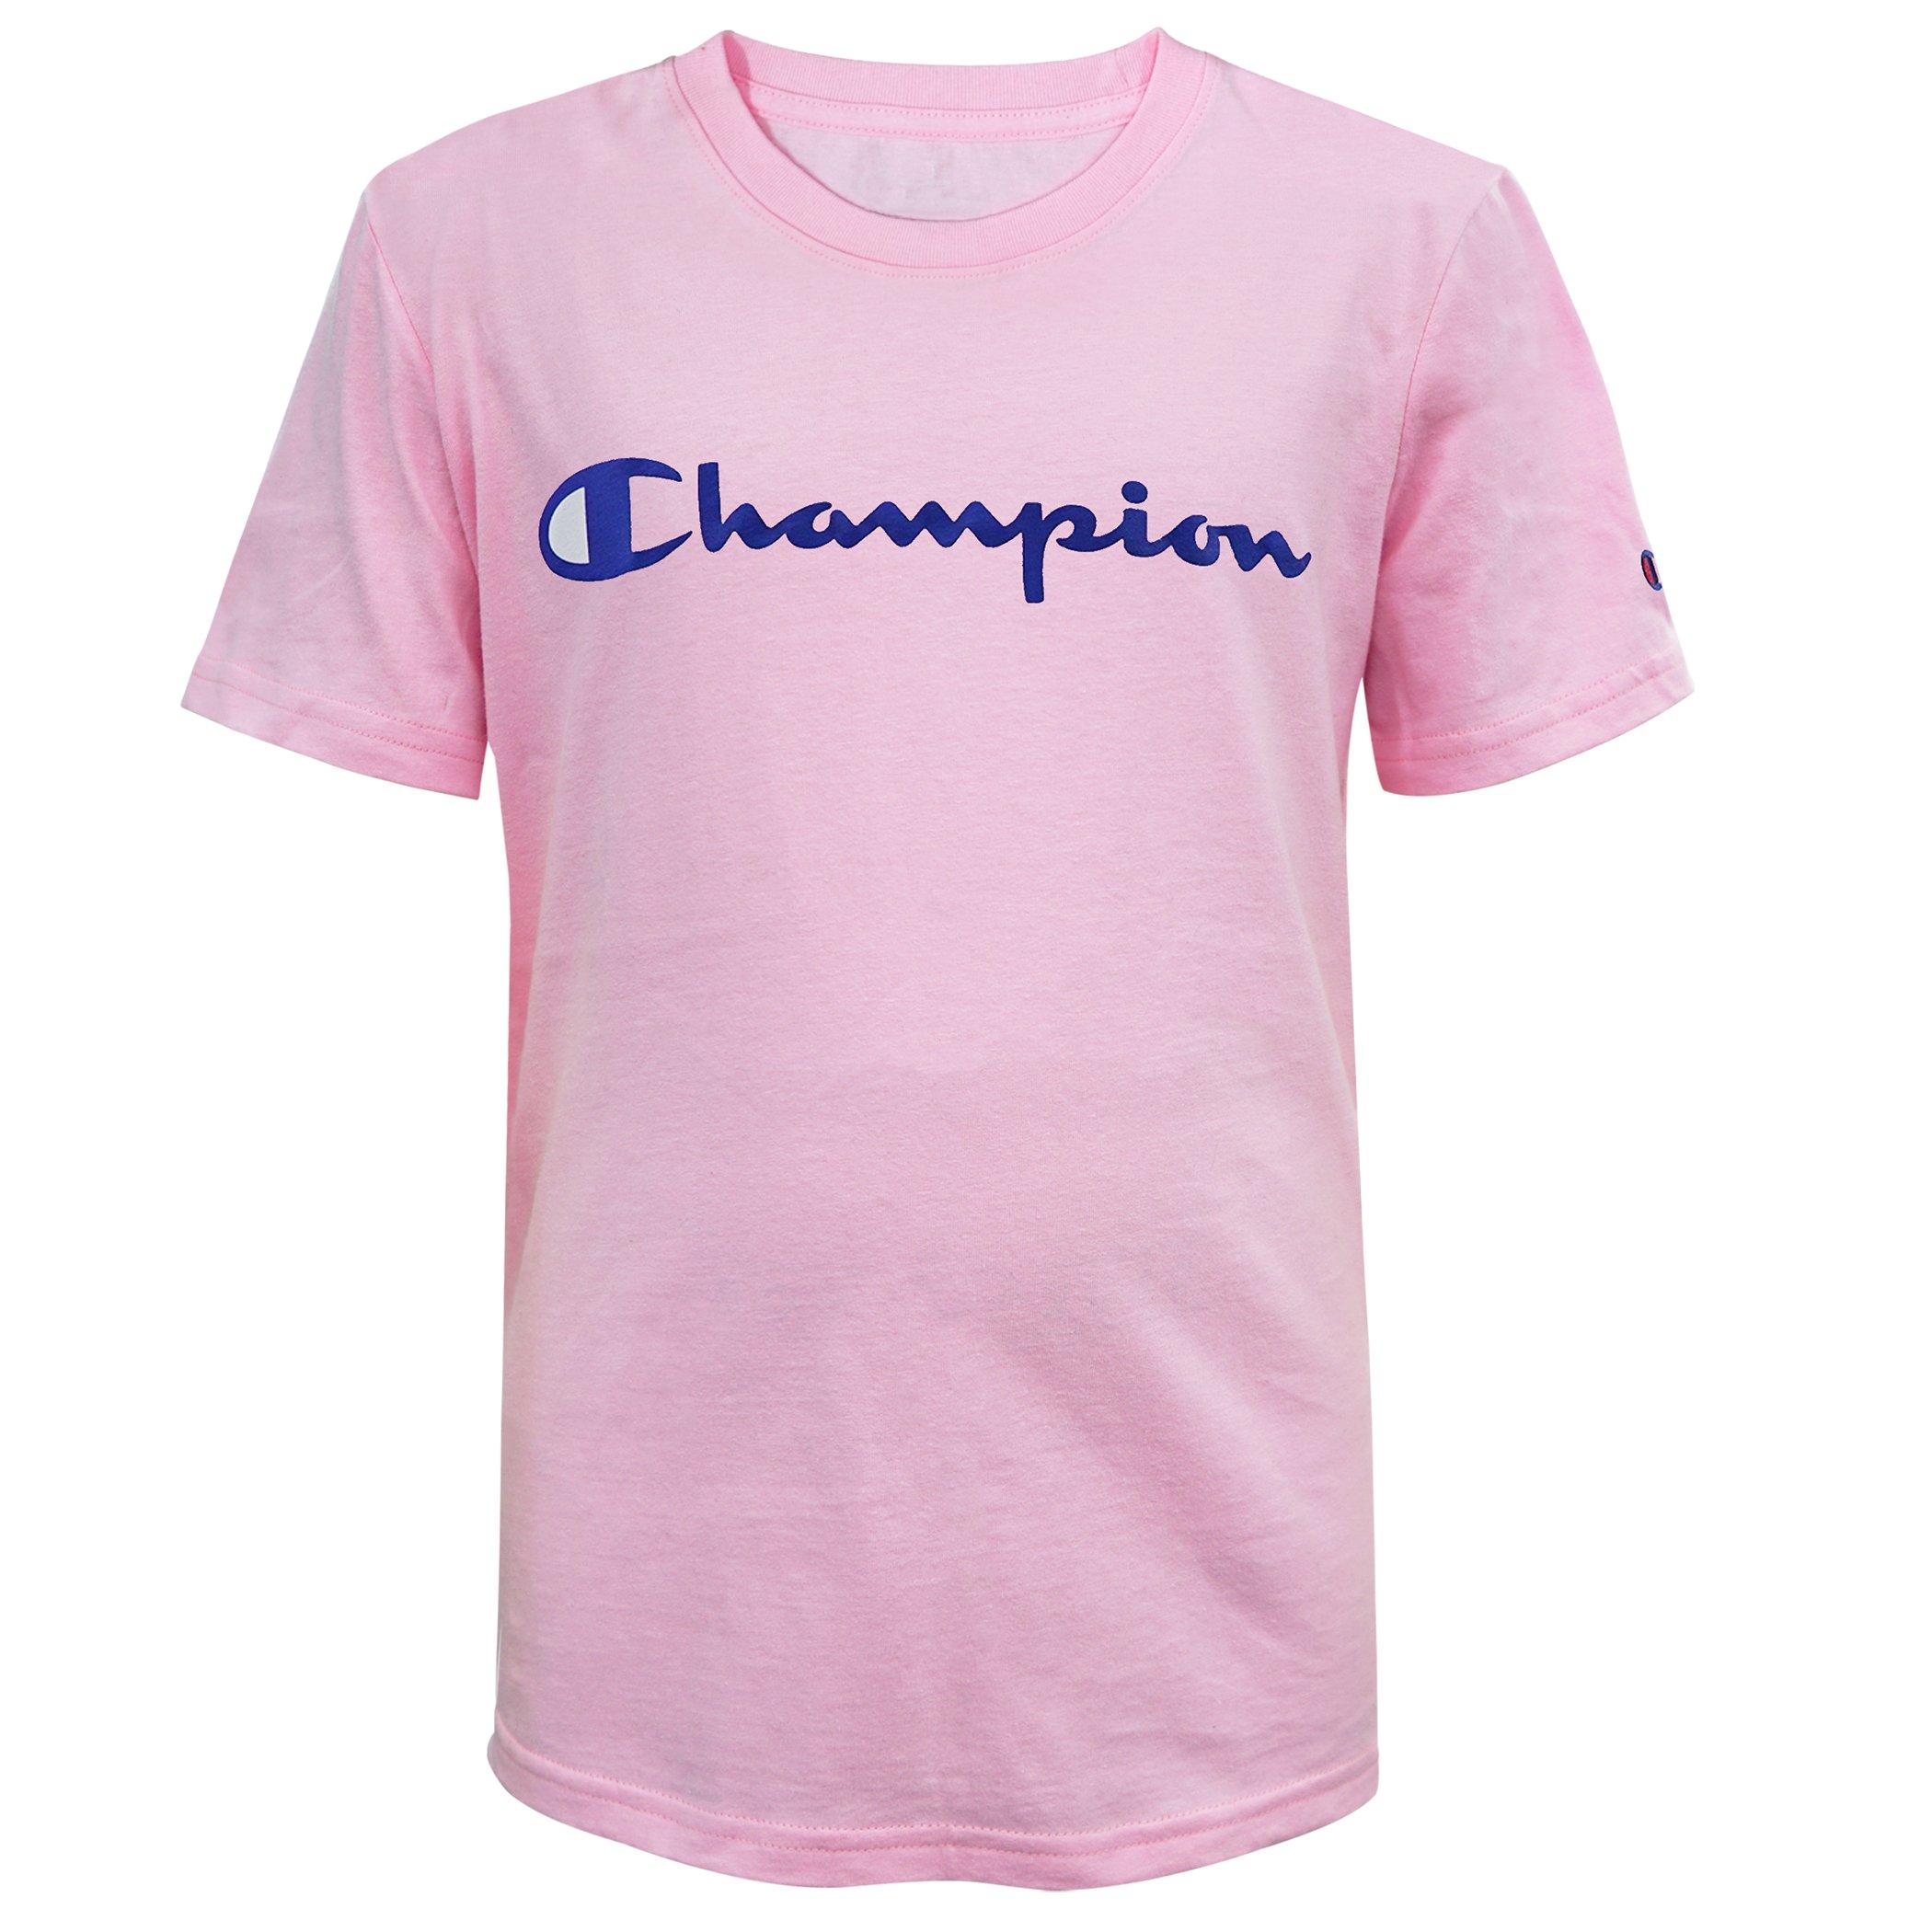 champion shirt hibbett sports